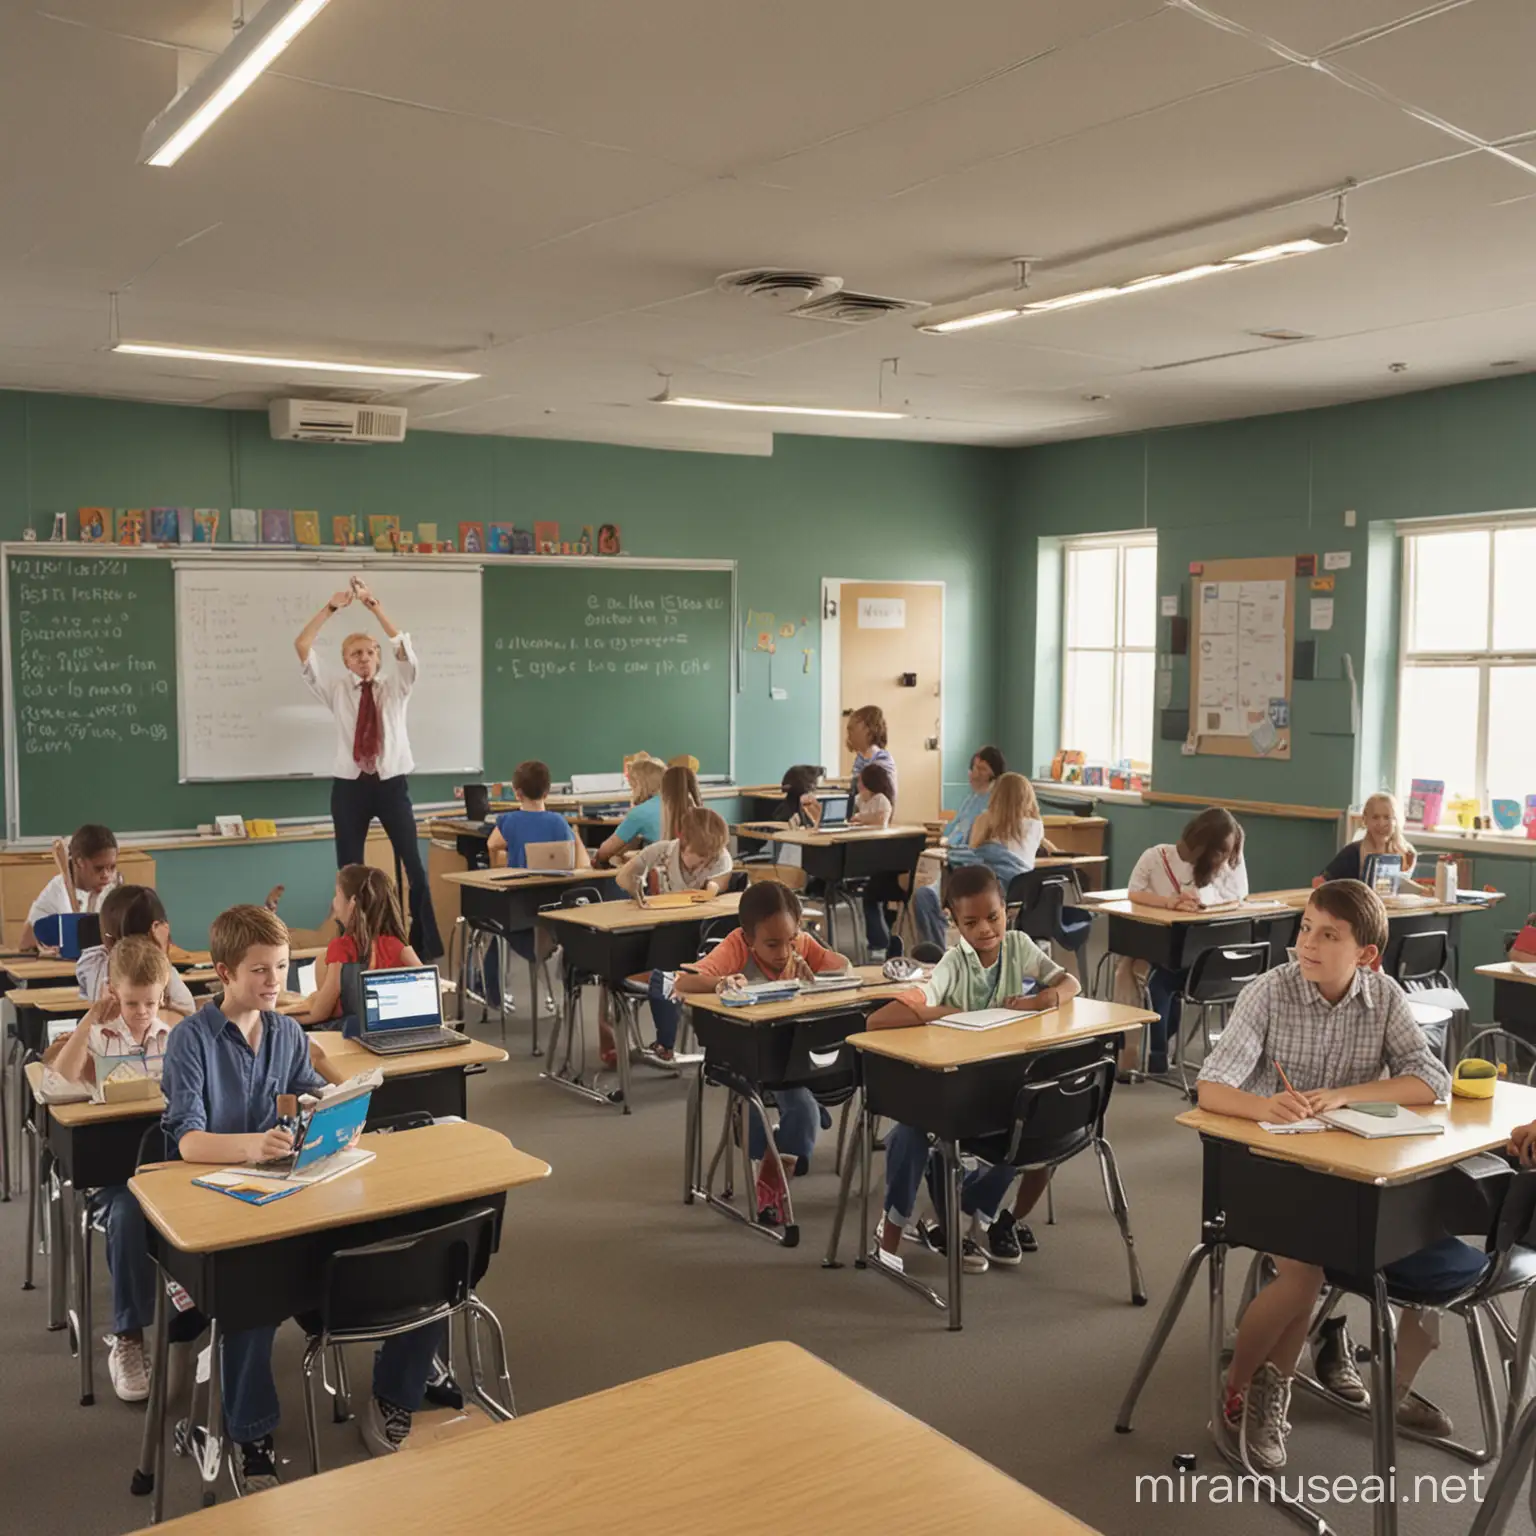 21st century classroom